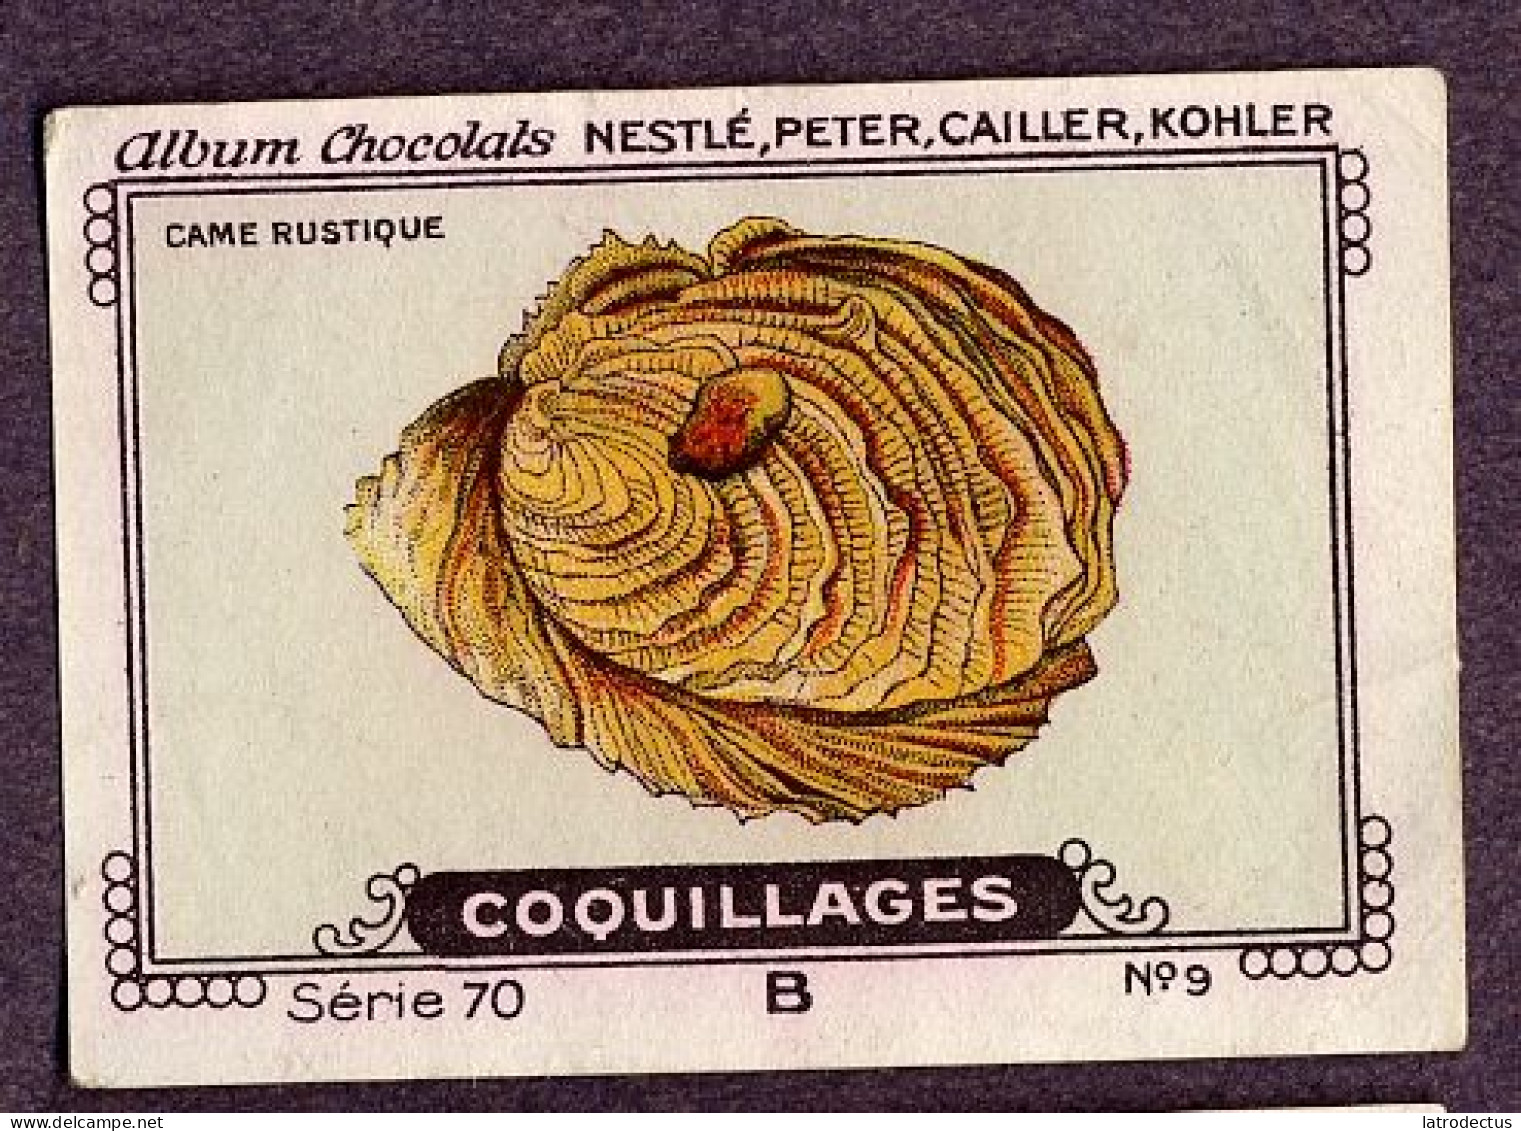 Nestlé - 70B - Coquillages, Shellfish - 9 - Came Rustique - Nestlé